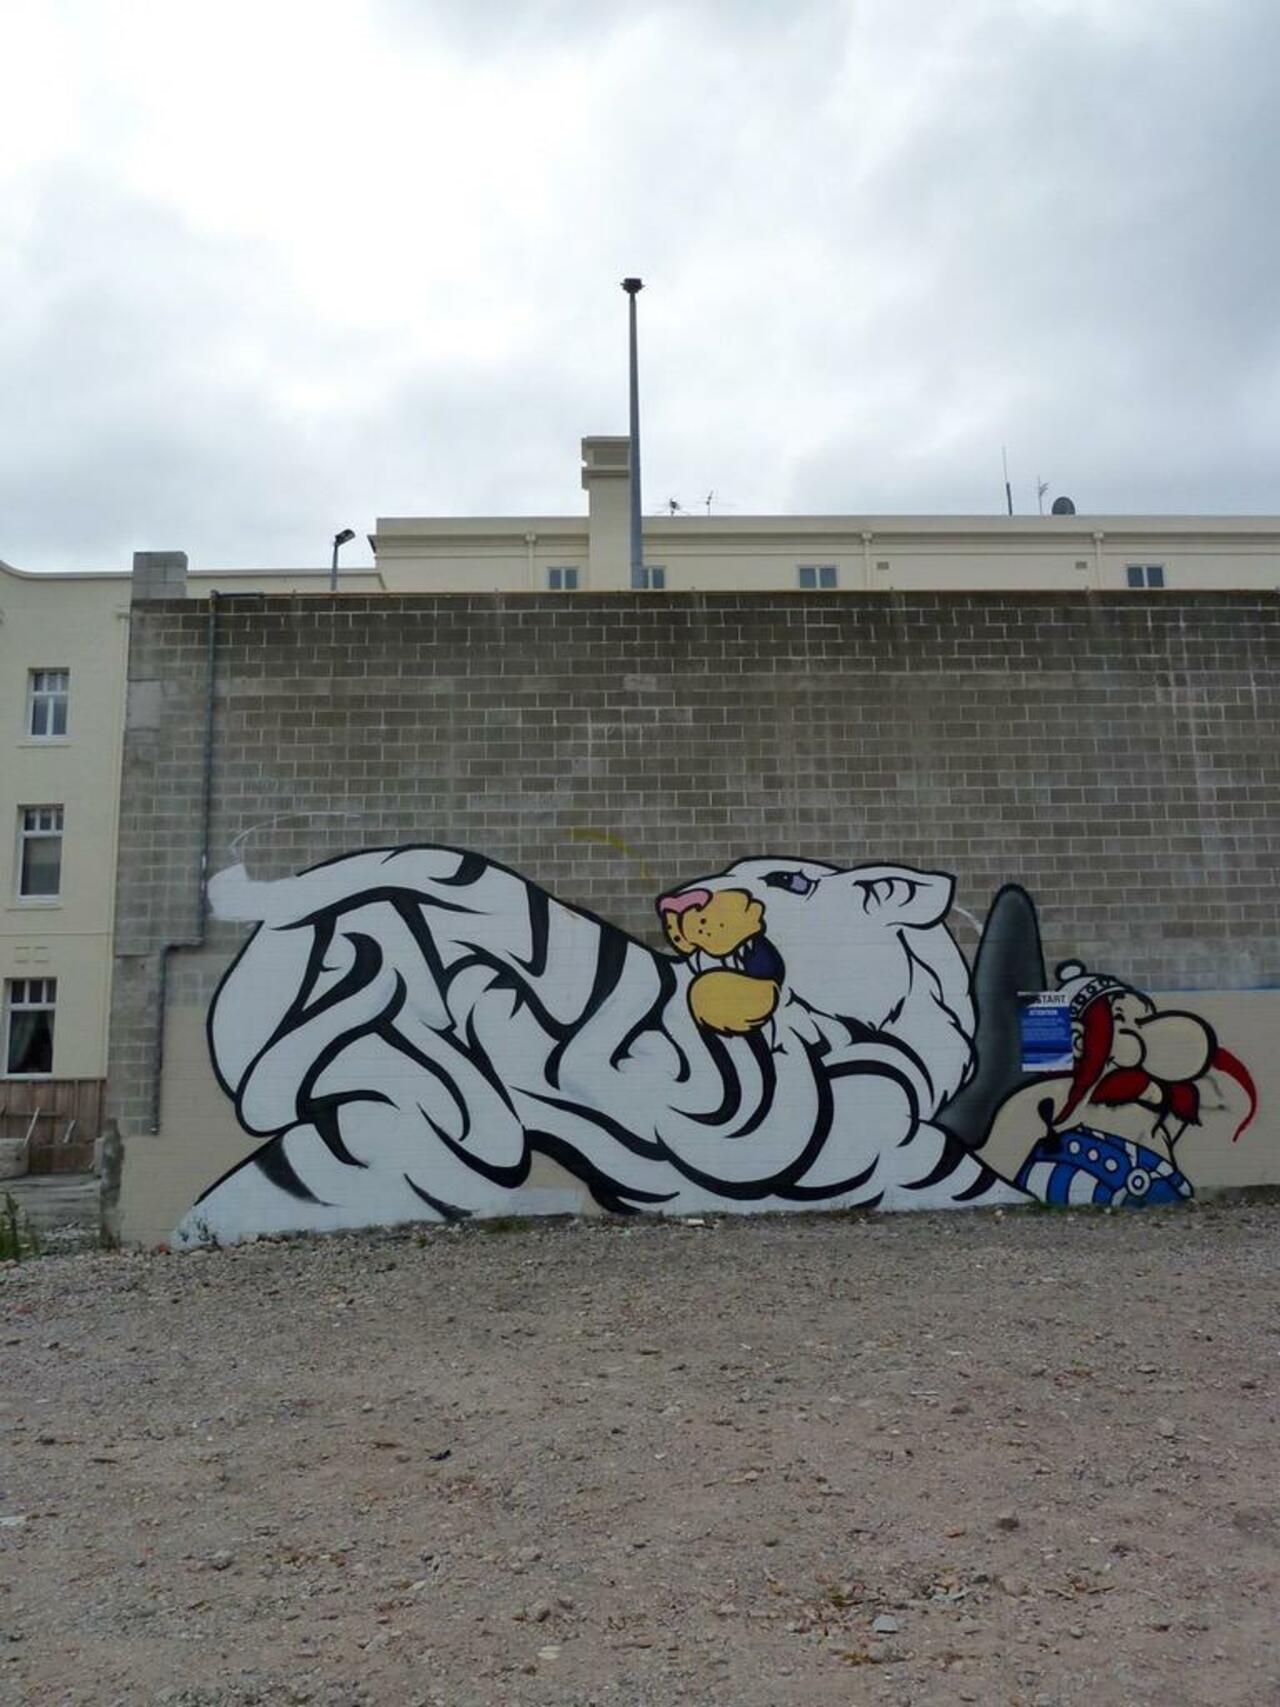 Artist unknown Wonderful work from Christchurch, New Zealand #streetartnz #streetart #graffiti #mural #streetkiwi http://t.co/iagUkrGX4v